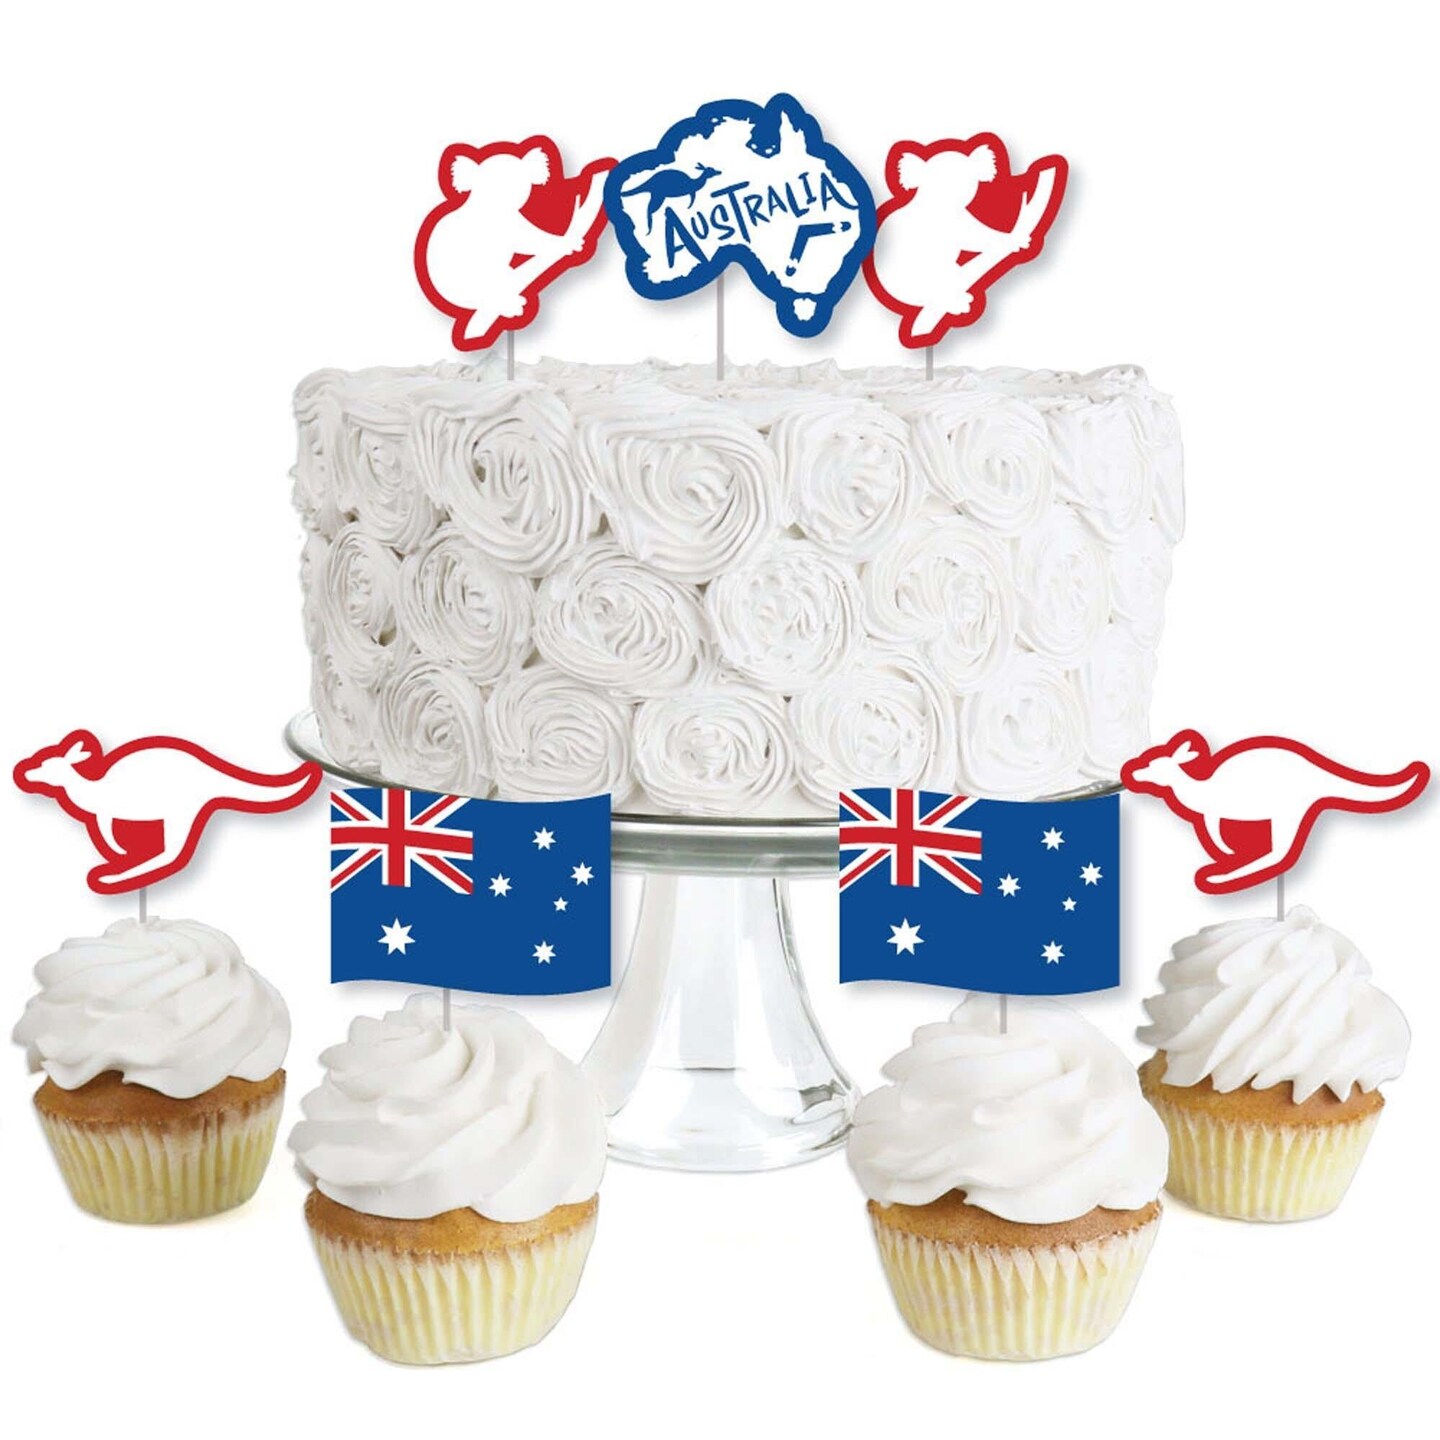 File:Australia Day Thong Cake (5389278565).jpg - Wikimedia Commons